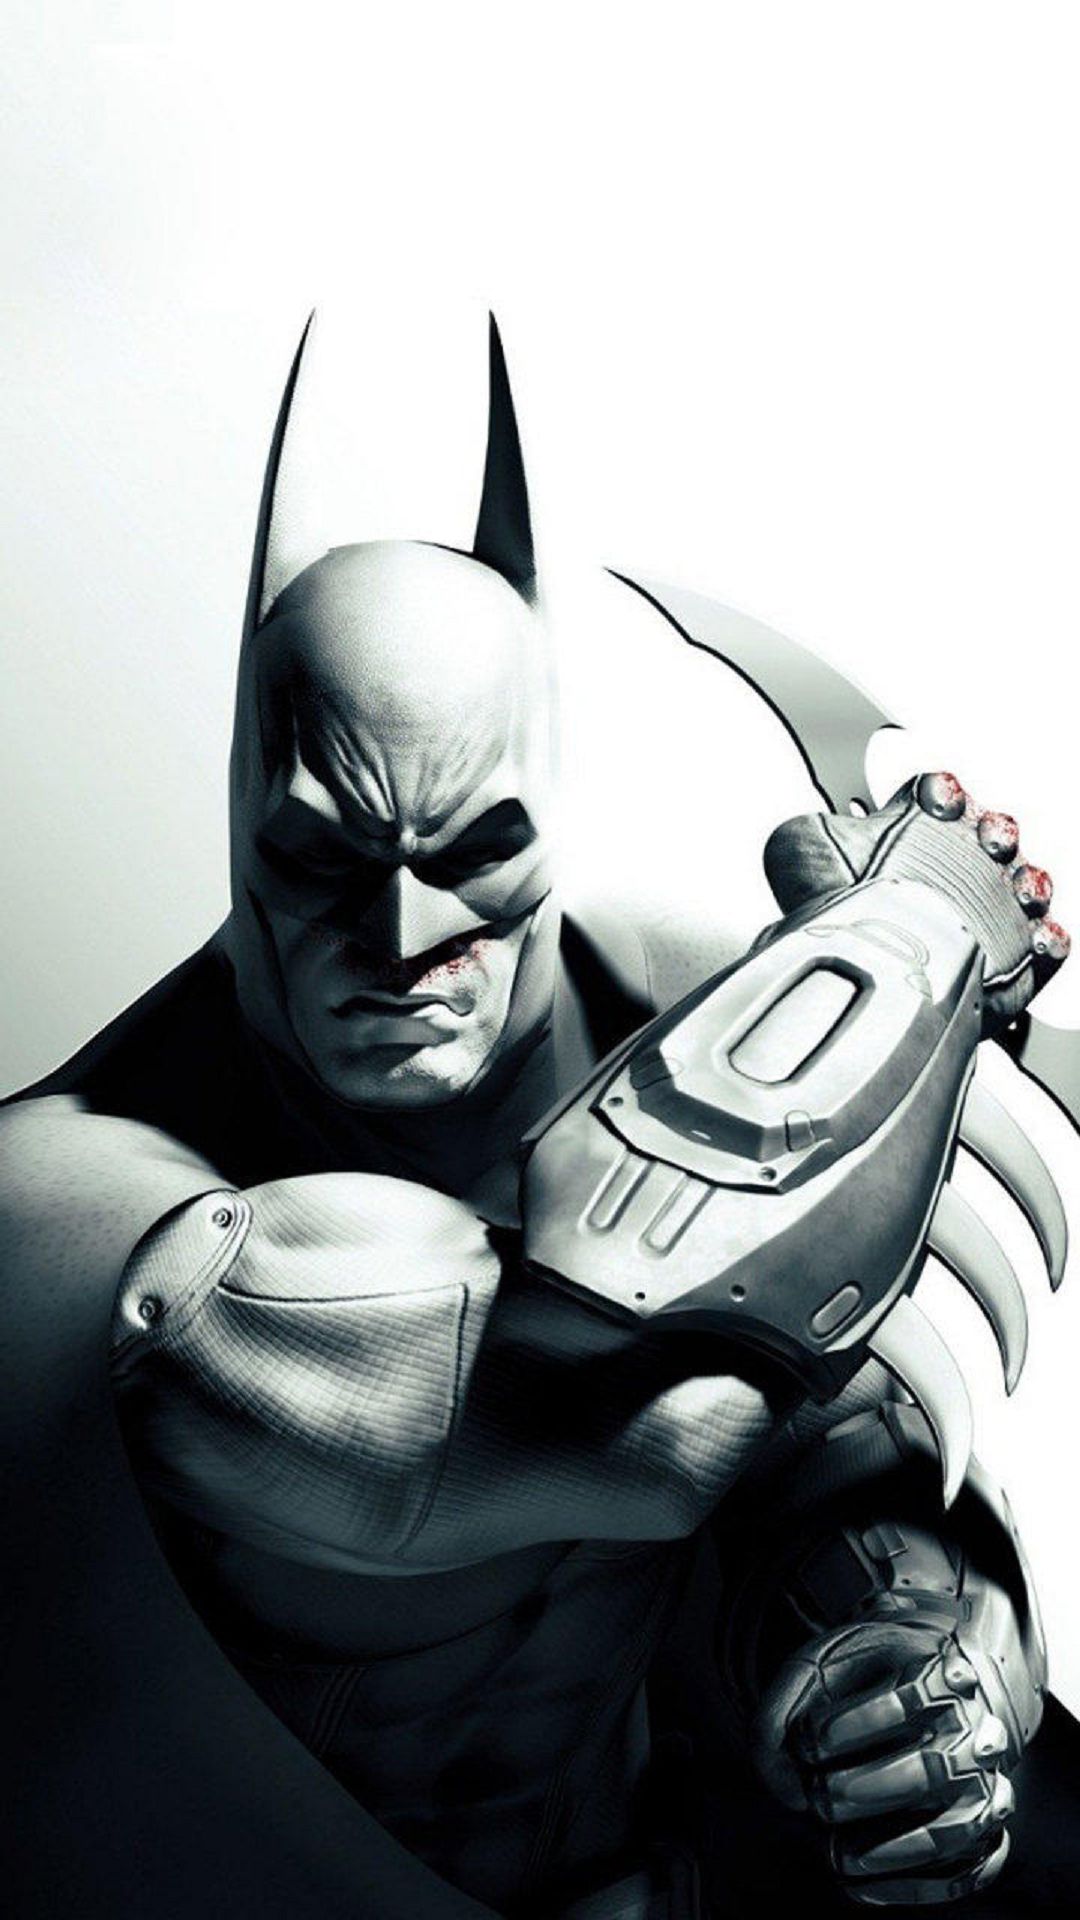 batman wallpaper for iphone 6,batman,fictional character,superhero,justice league,action figure